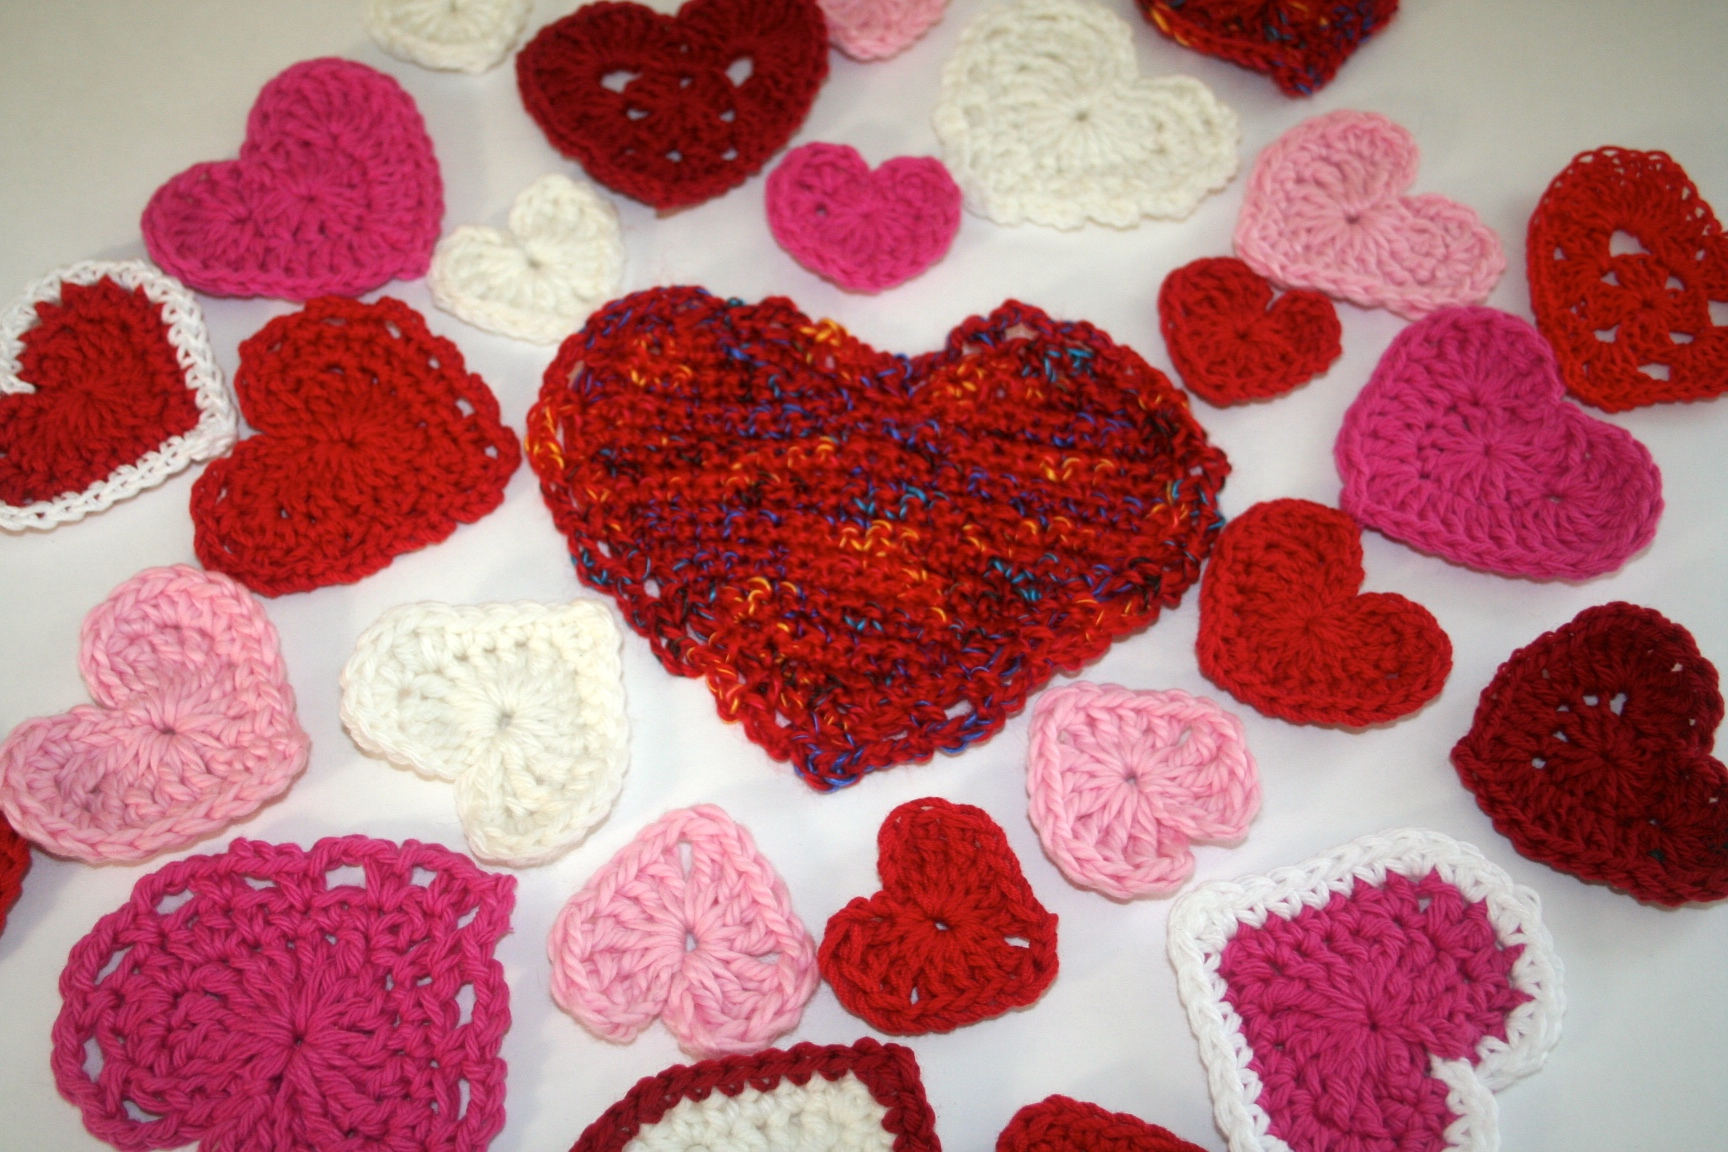 Crochet Heart Patterns Have A Heart The Best Free Crochet Heart Patterns Between My